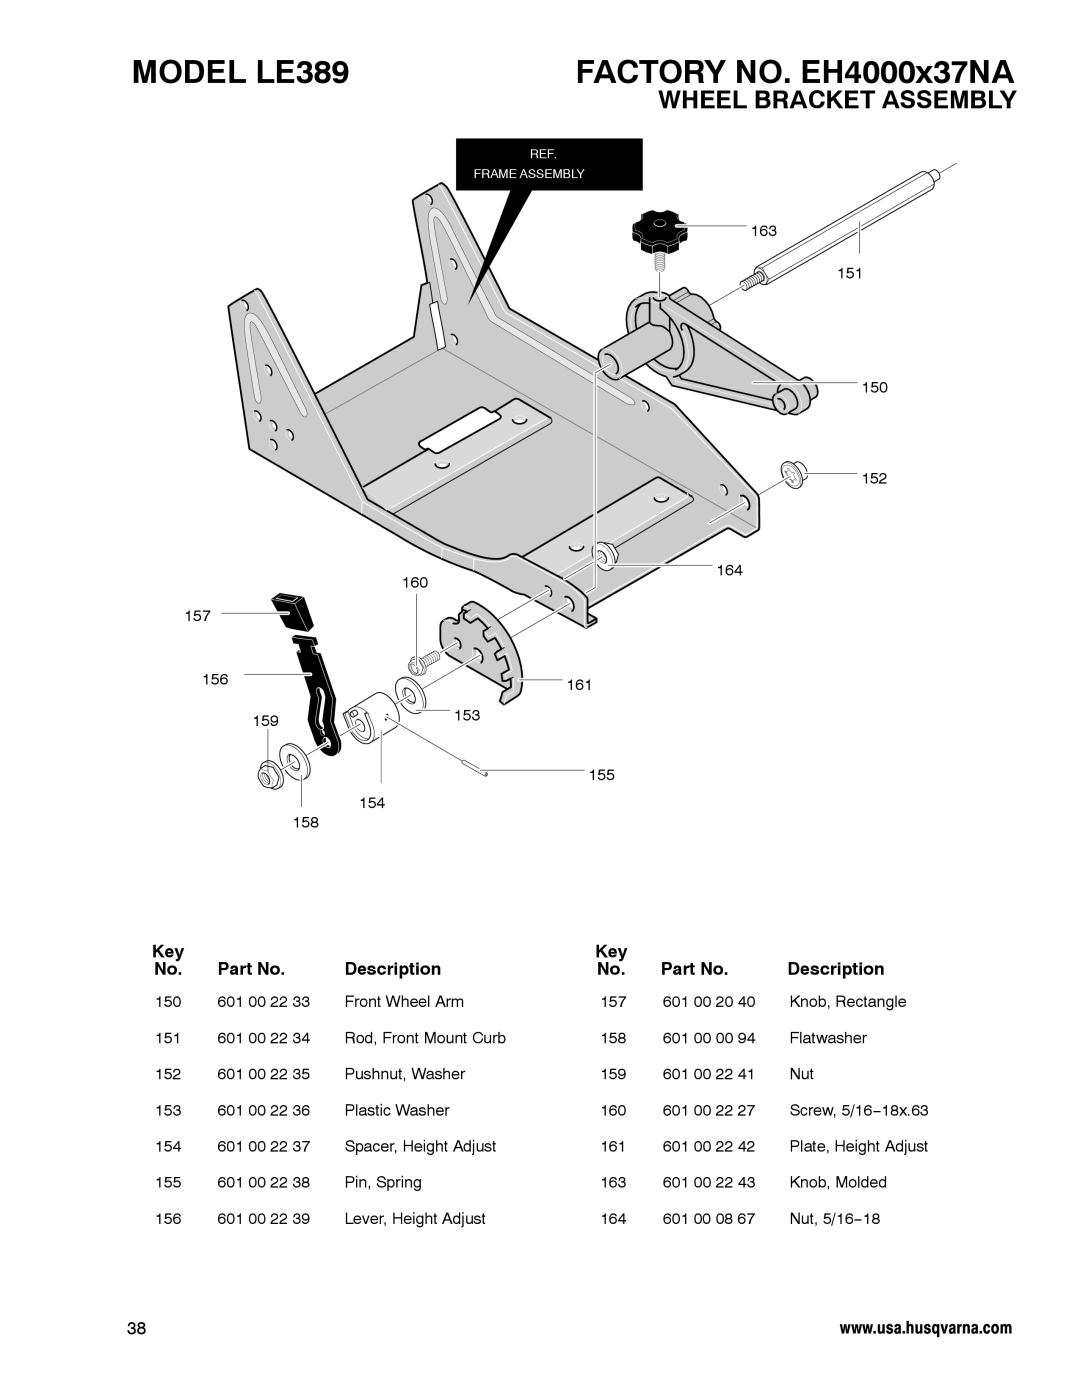 Husqvarna manual MODEL LE389, FACTORY NO. EH4000x37NA, Wheel Bracket Assembly, Description 